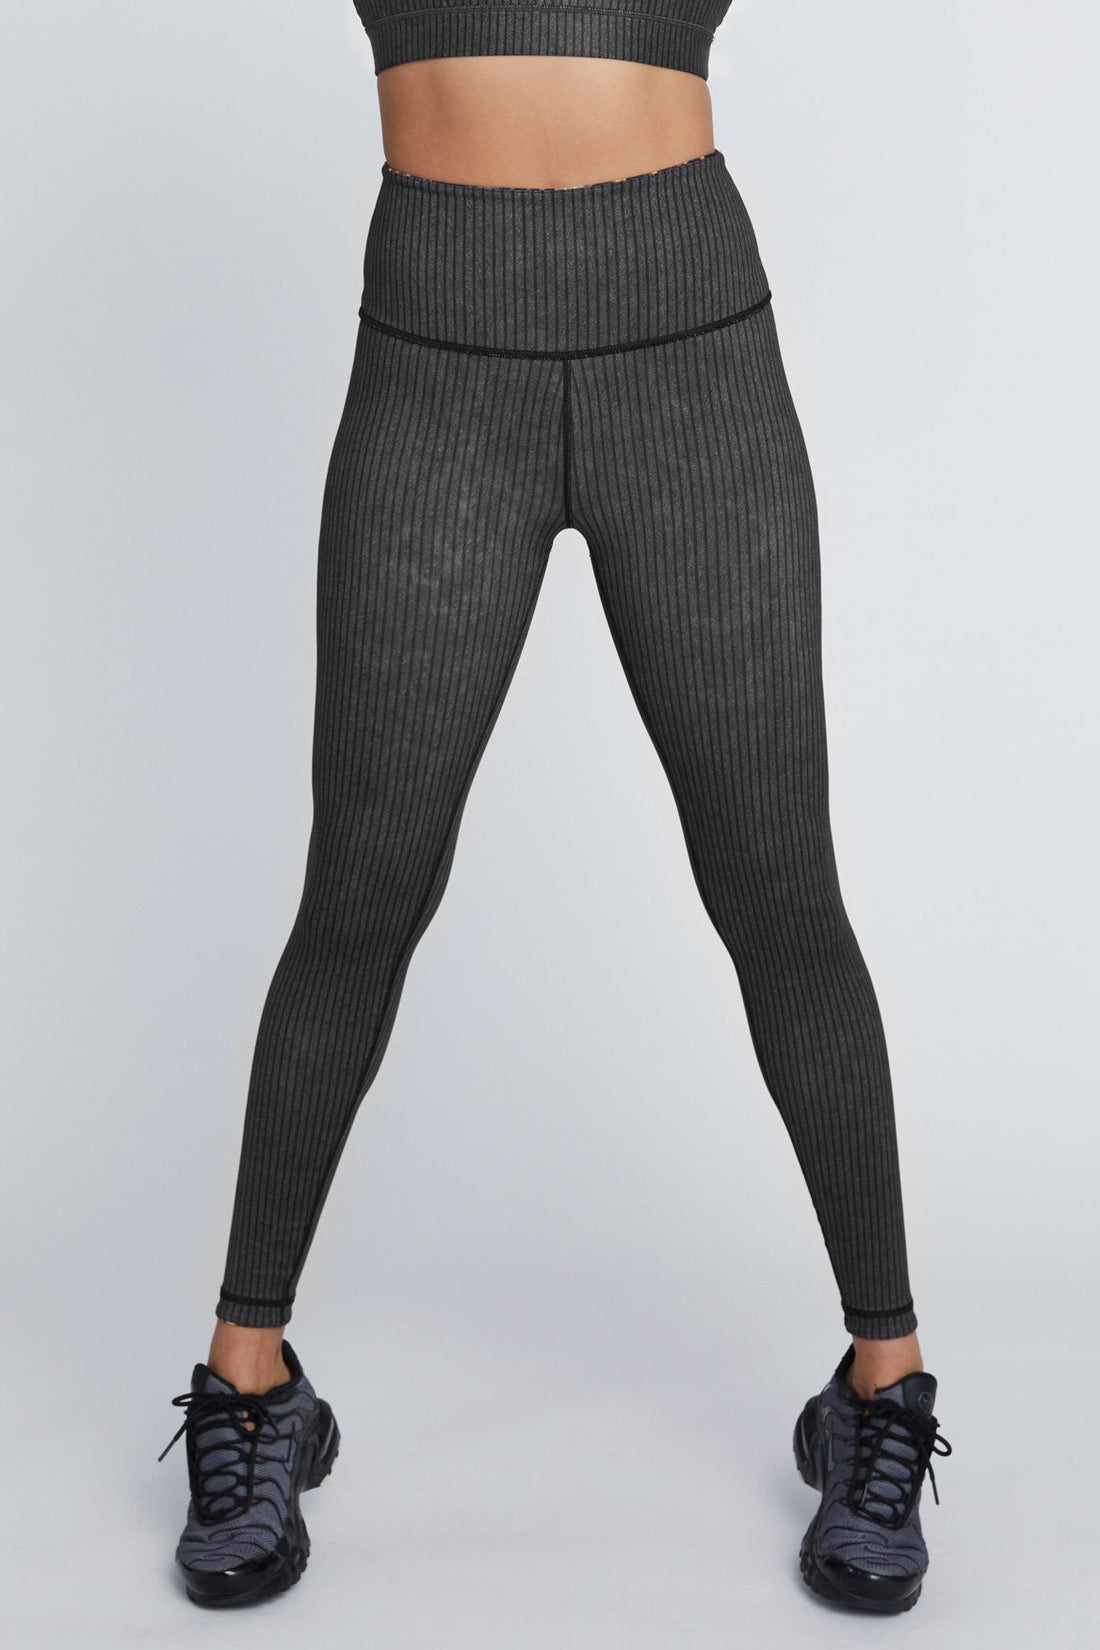 High Waist Reversible Leggings Black And Grey Stripe – Wear It To